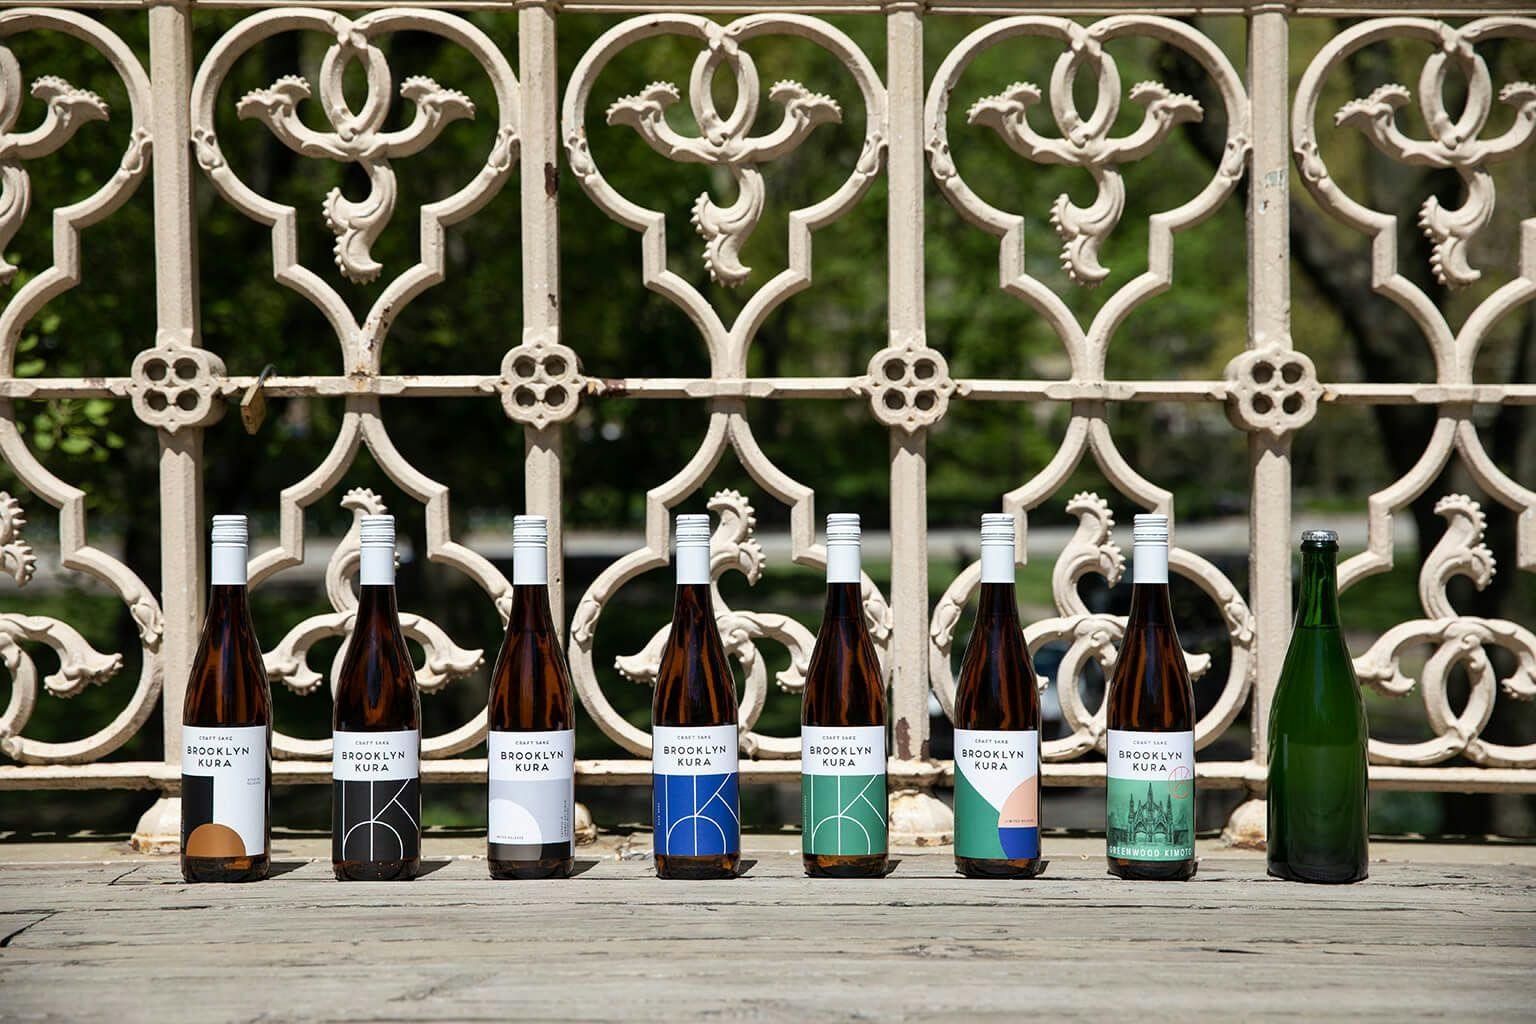 The Brooklyn Kura sake lineup is always changing, offering unique seasonals as well as beloved staples.